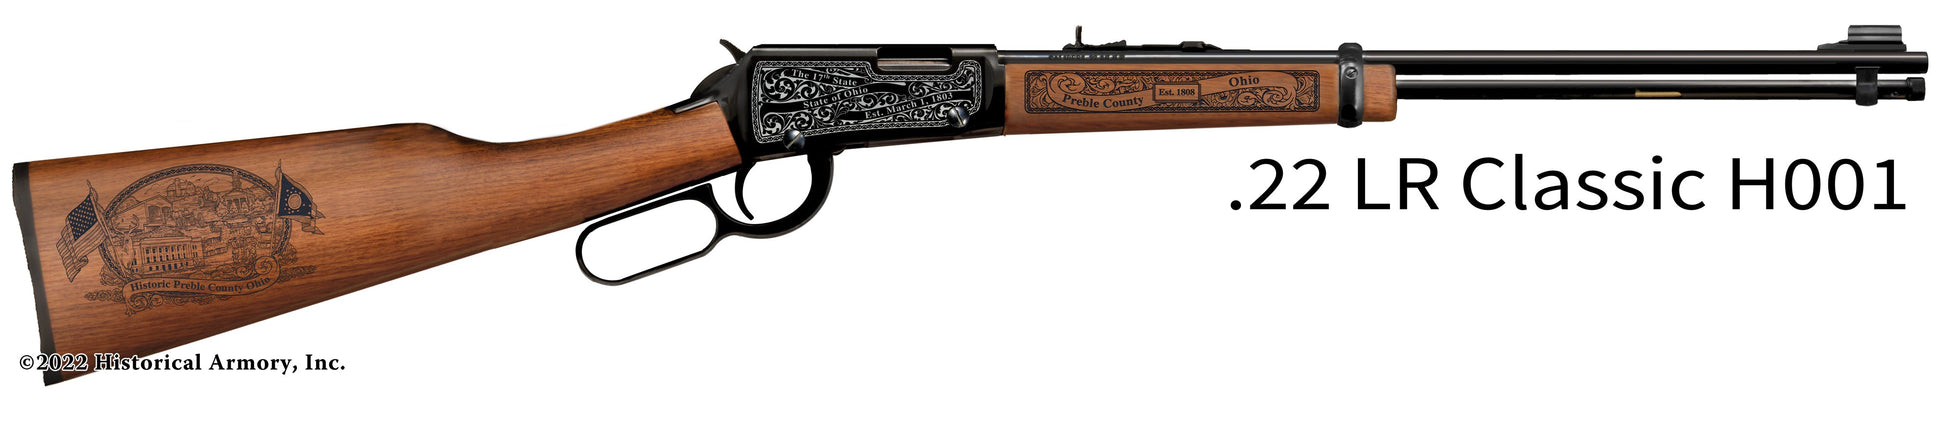 Preble County Ohio Engraved Henry H001 Rifle